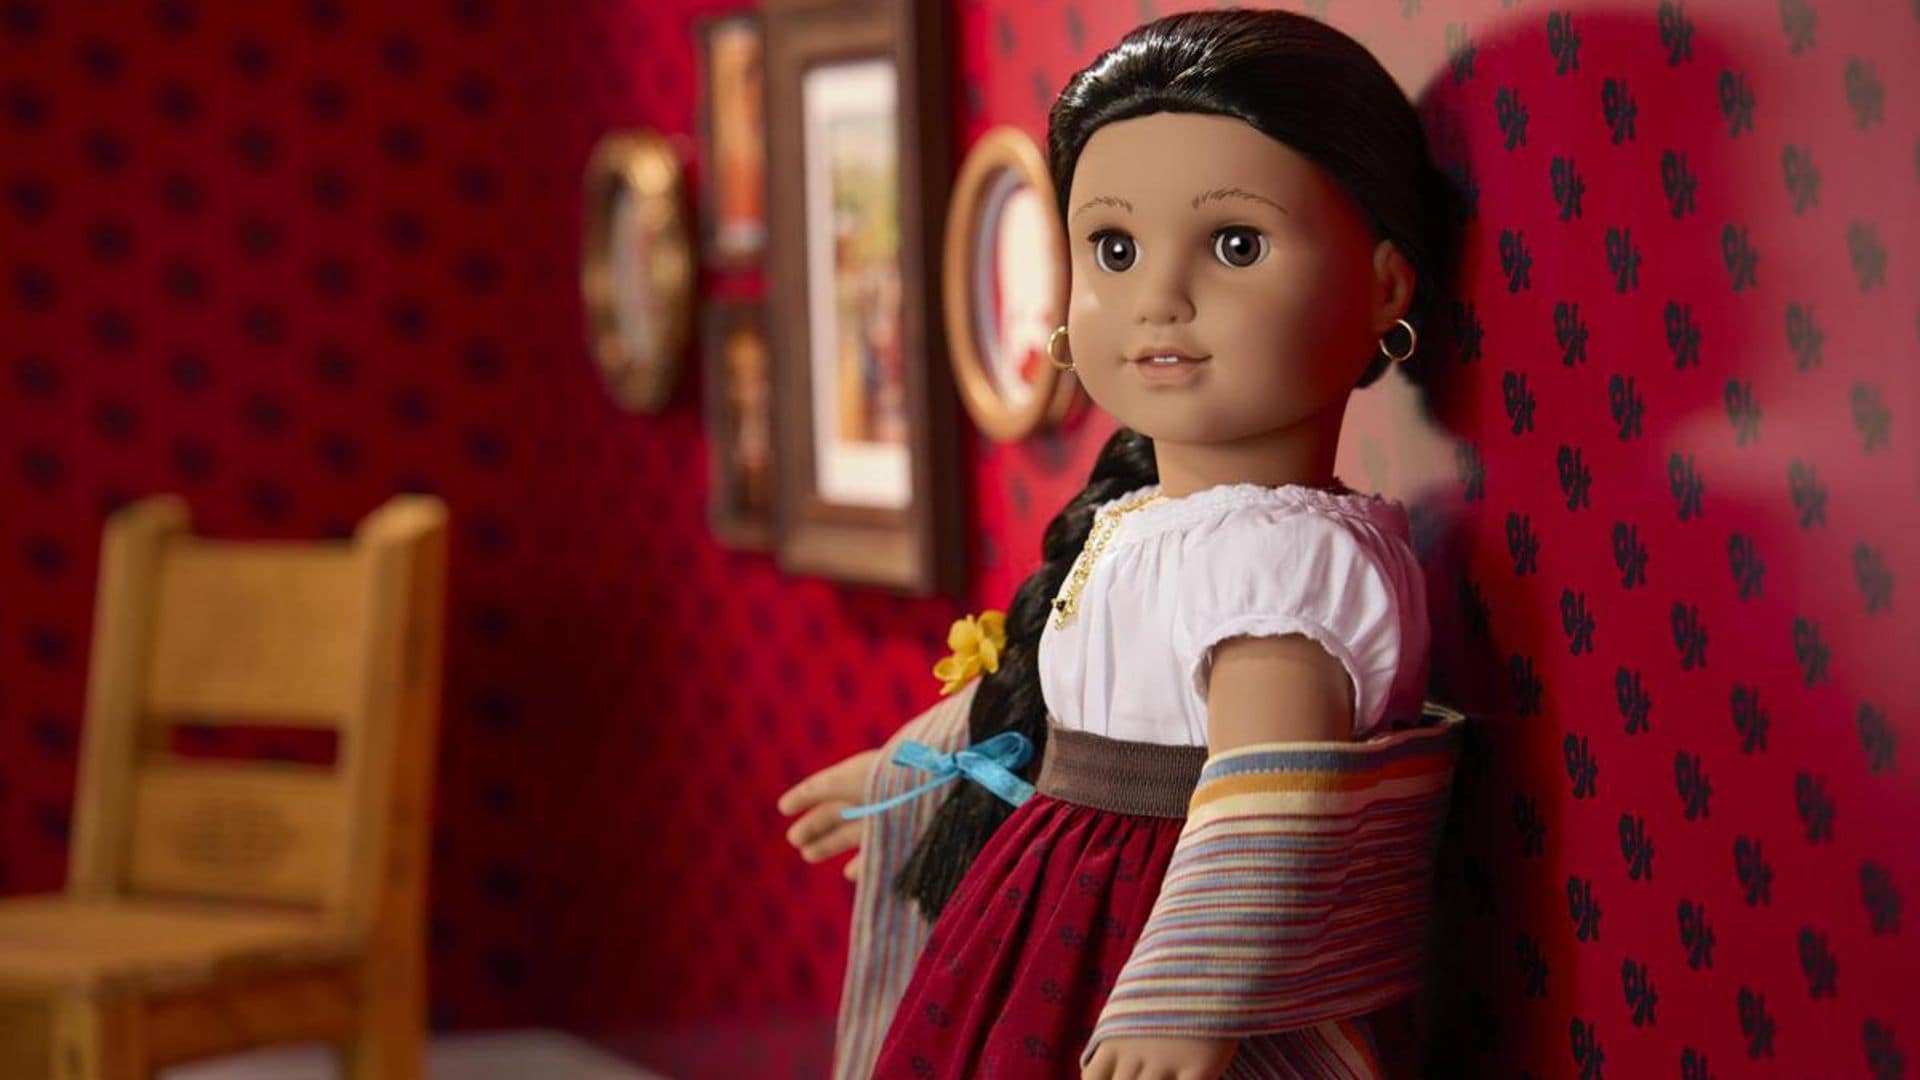 American Girl revives classic historical doll, Josefina Montoya